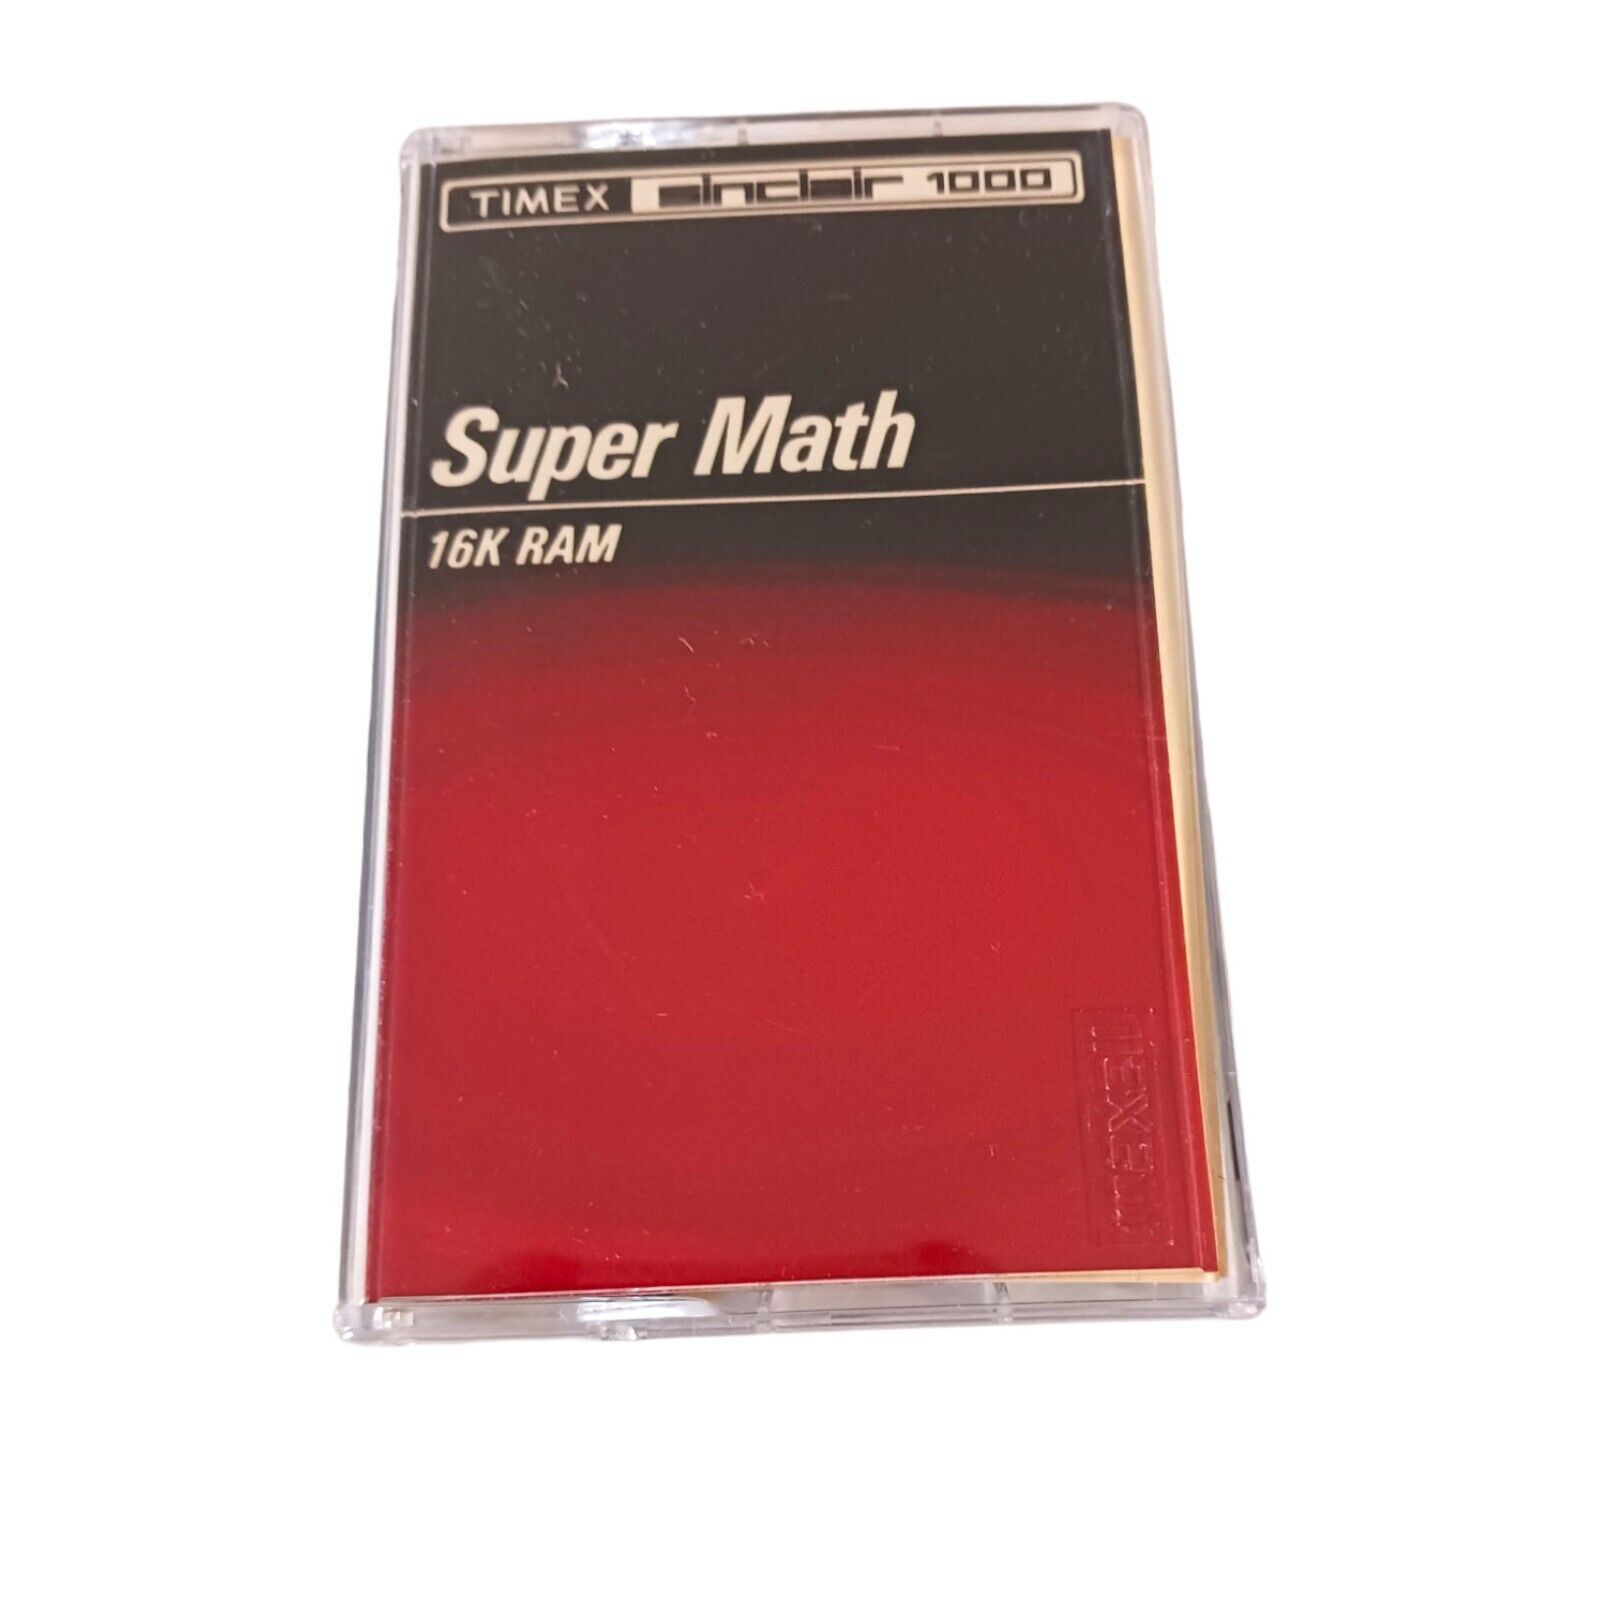 Super Math TIMEX SINCLAIR 1000 16K RAM Tape Software VTG